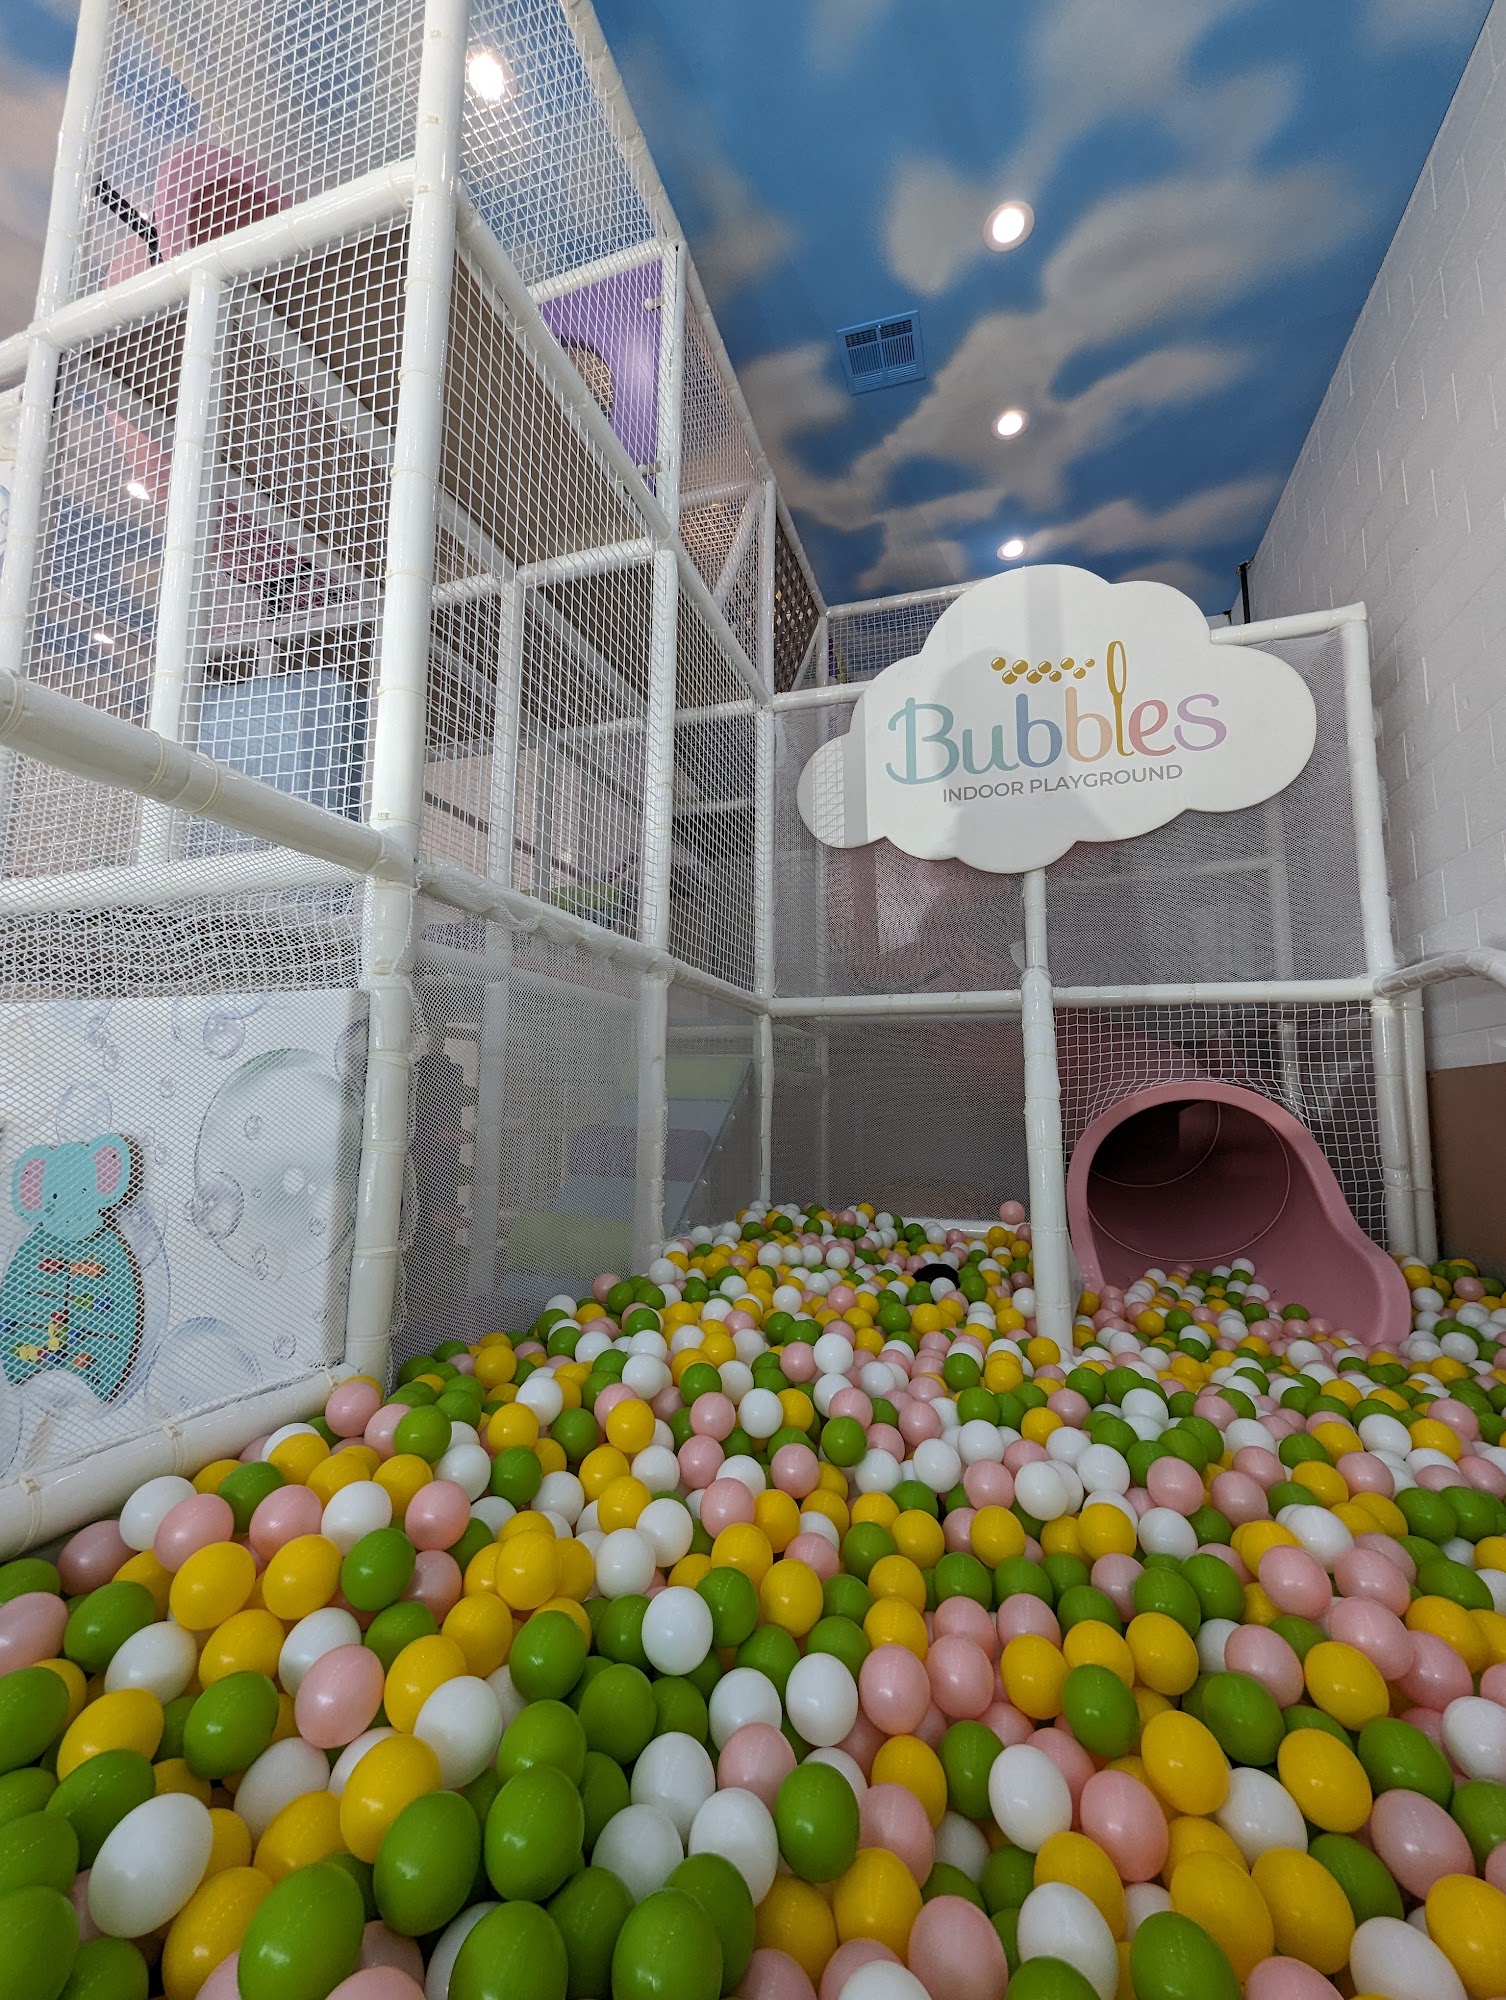 Bubbles Indoor Playground